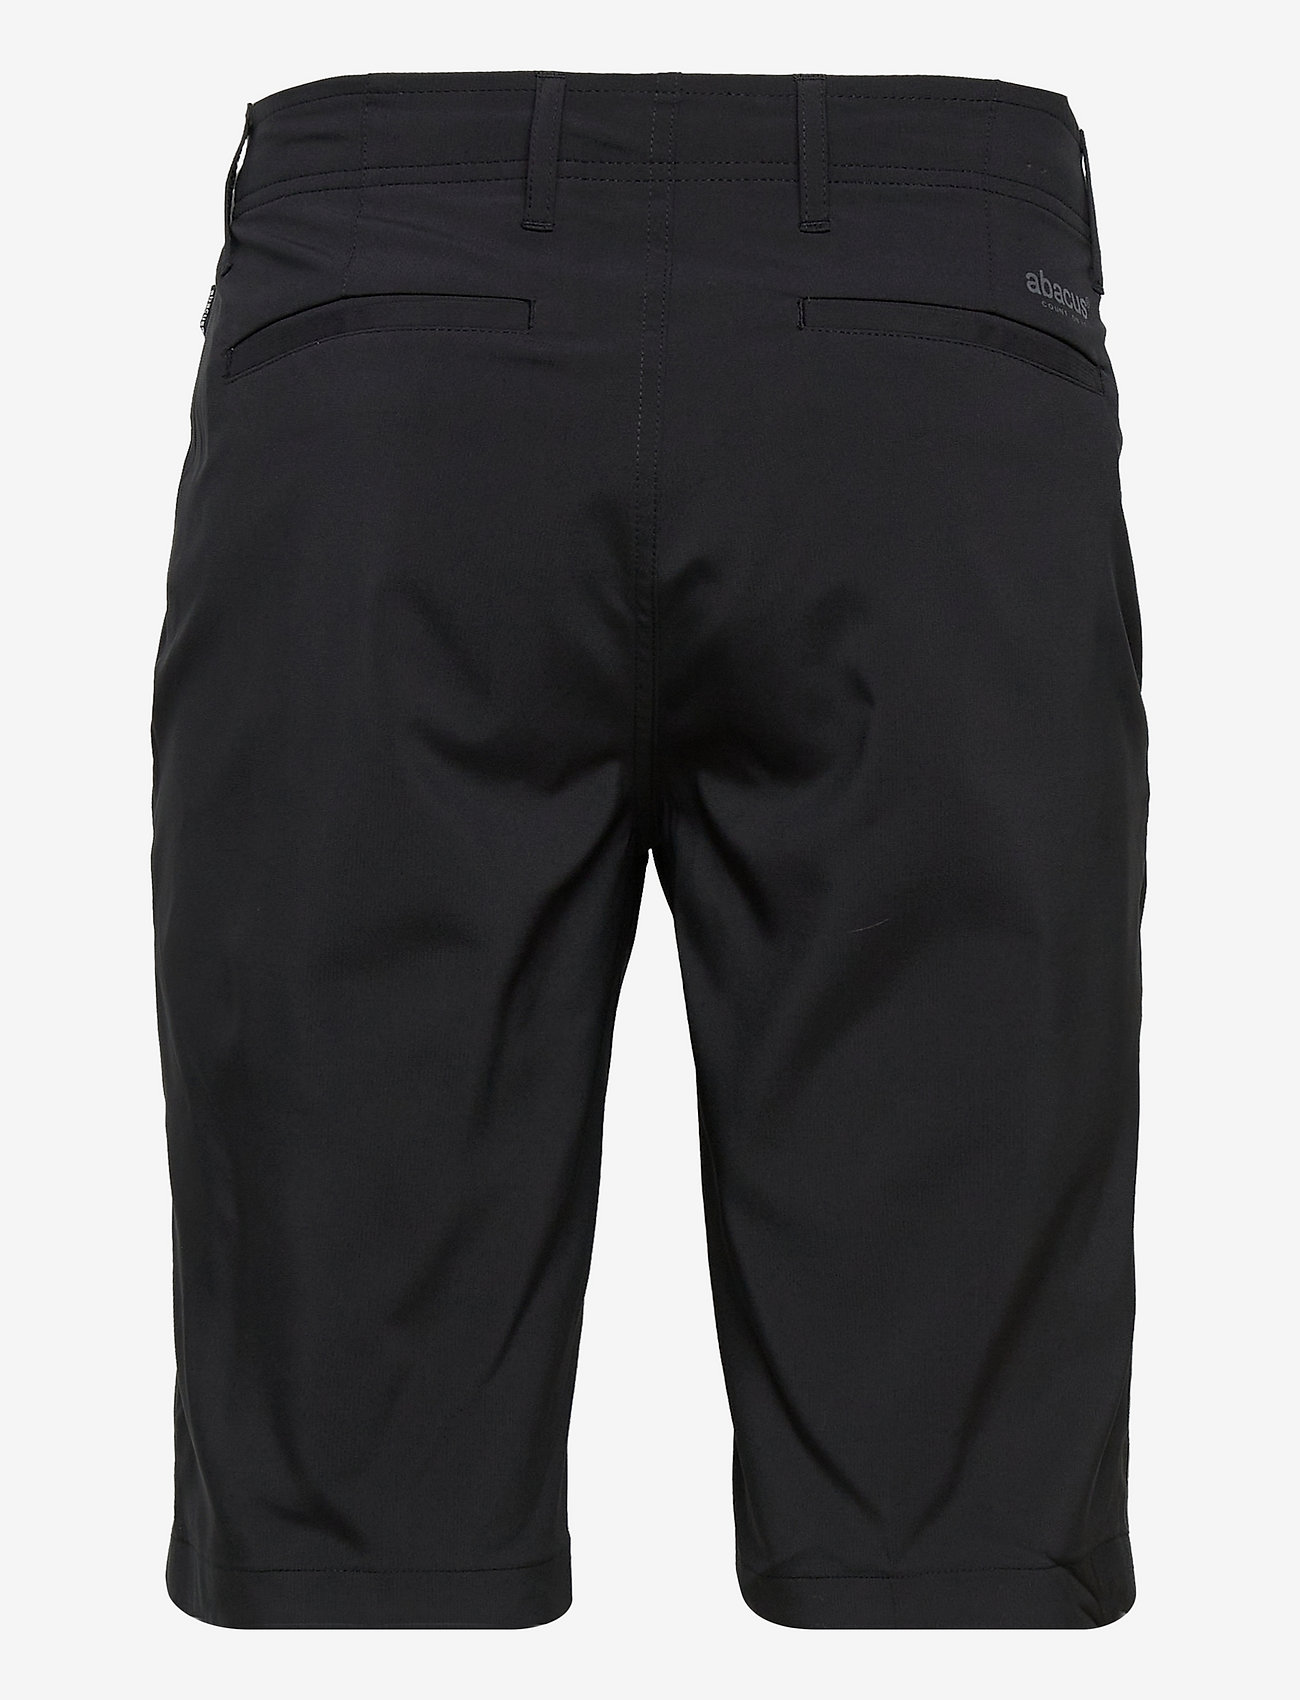 Abacus - Men Cleek flex shorts - golfshorts - black - 1